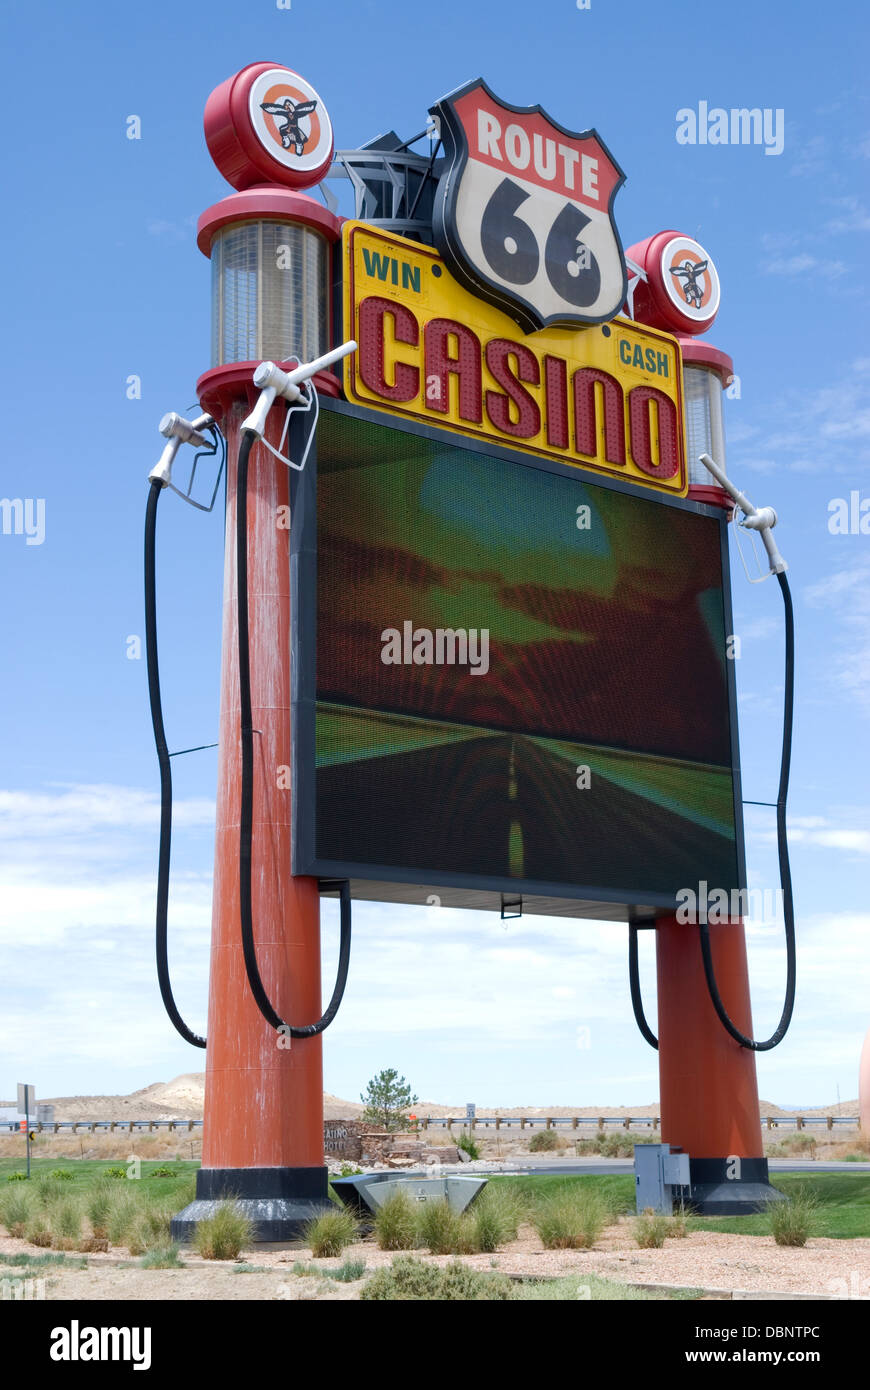 Route 66 Casino Hotel sign Albuquerque New Mexico USA. Stock Photo